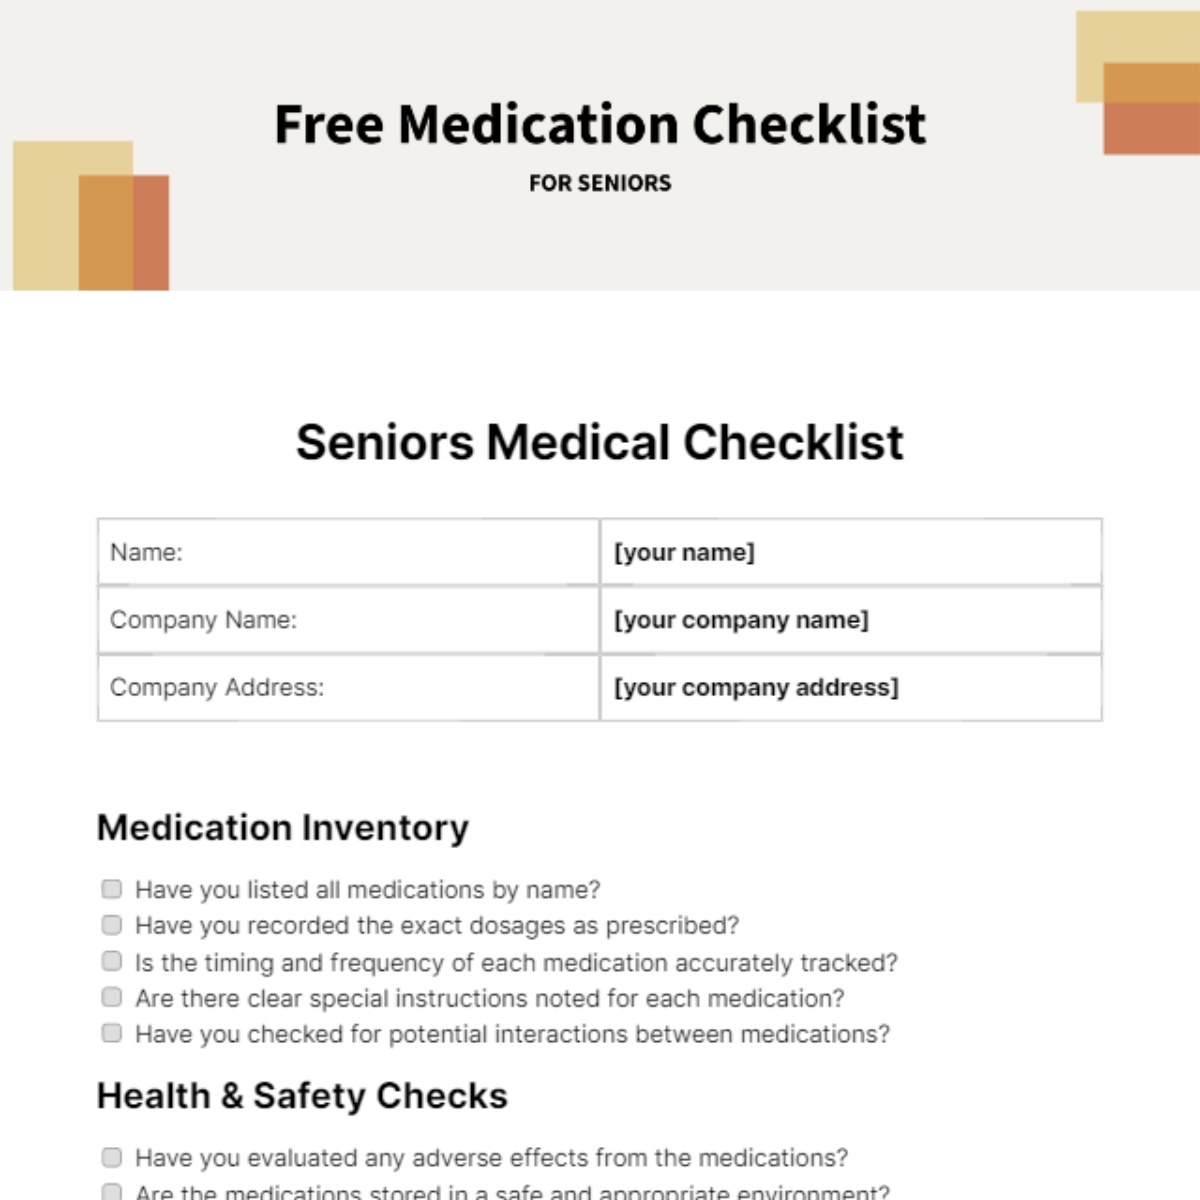 Free Medication Checklist for Seniors Template